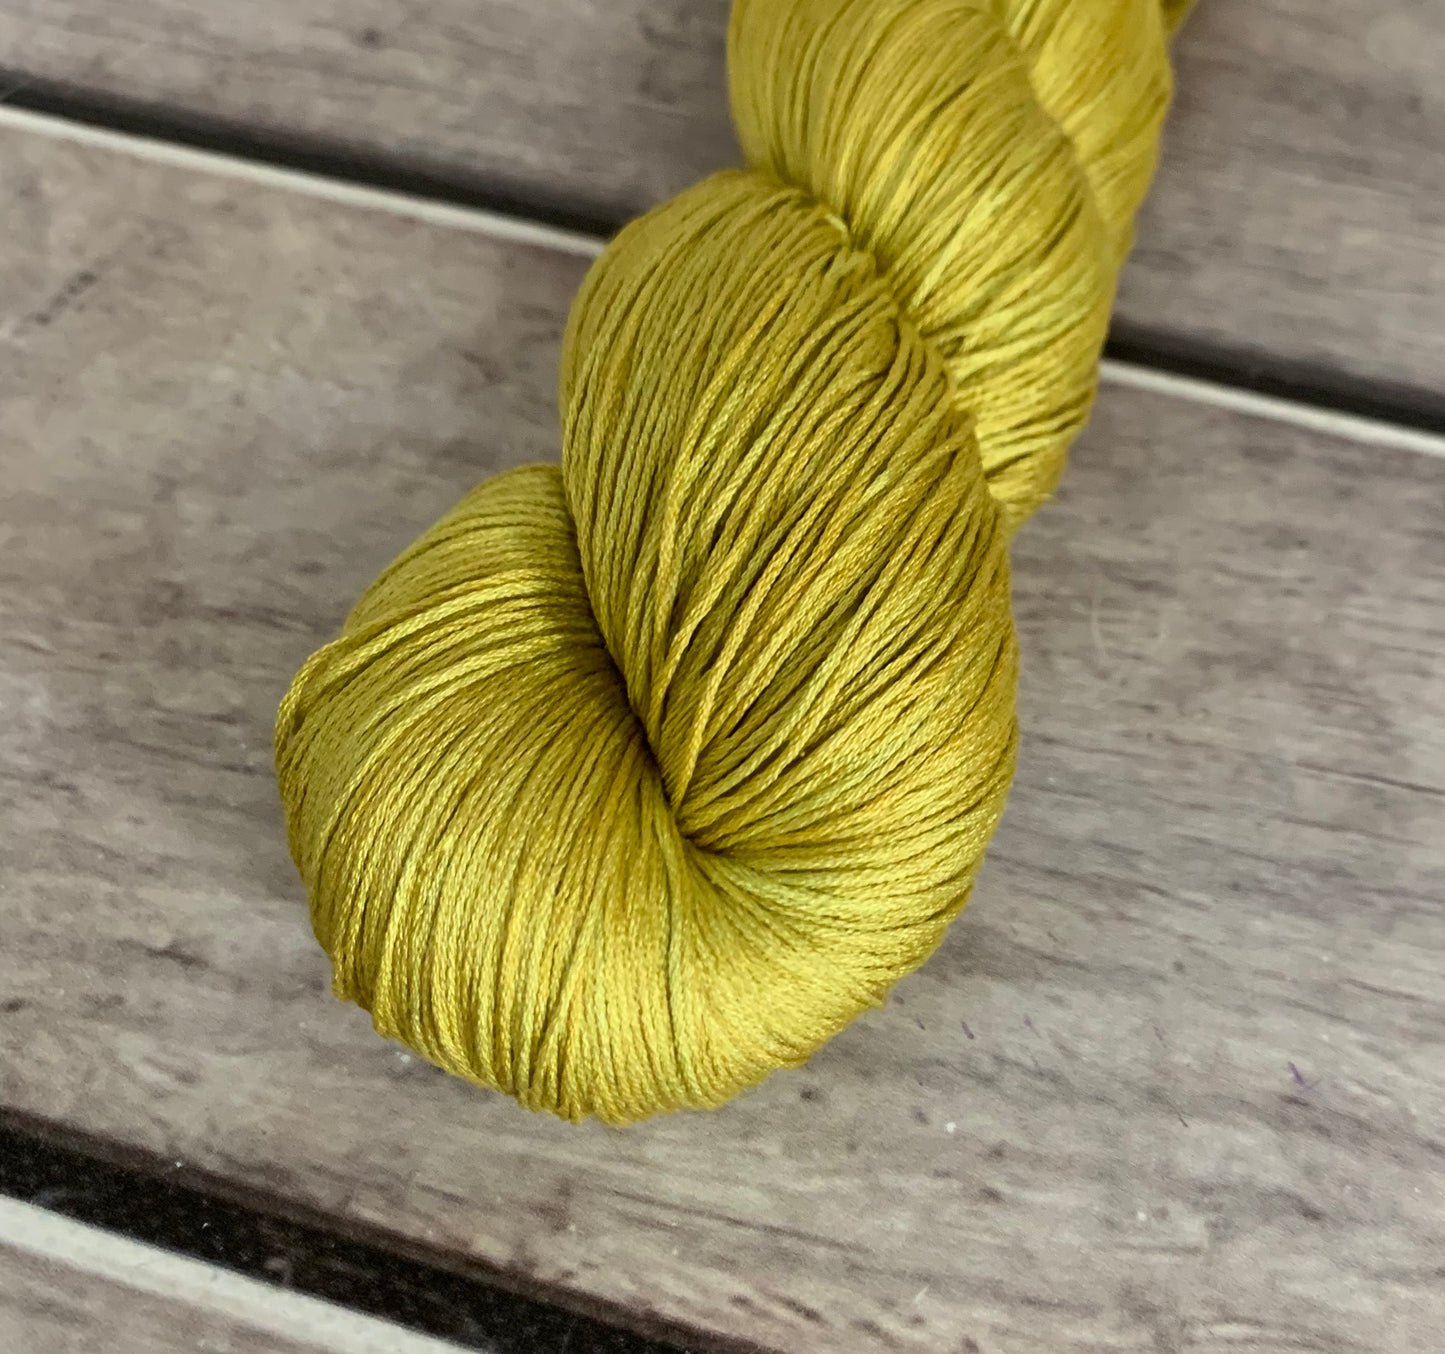 My Jade Bracelet - 100% mulberry silk - Rainflower lace yarn - OB